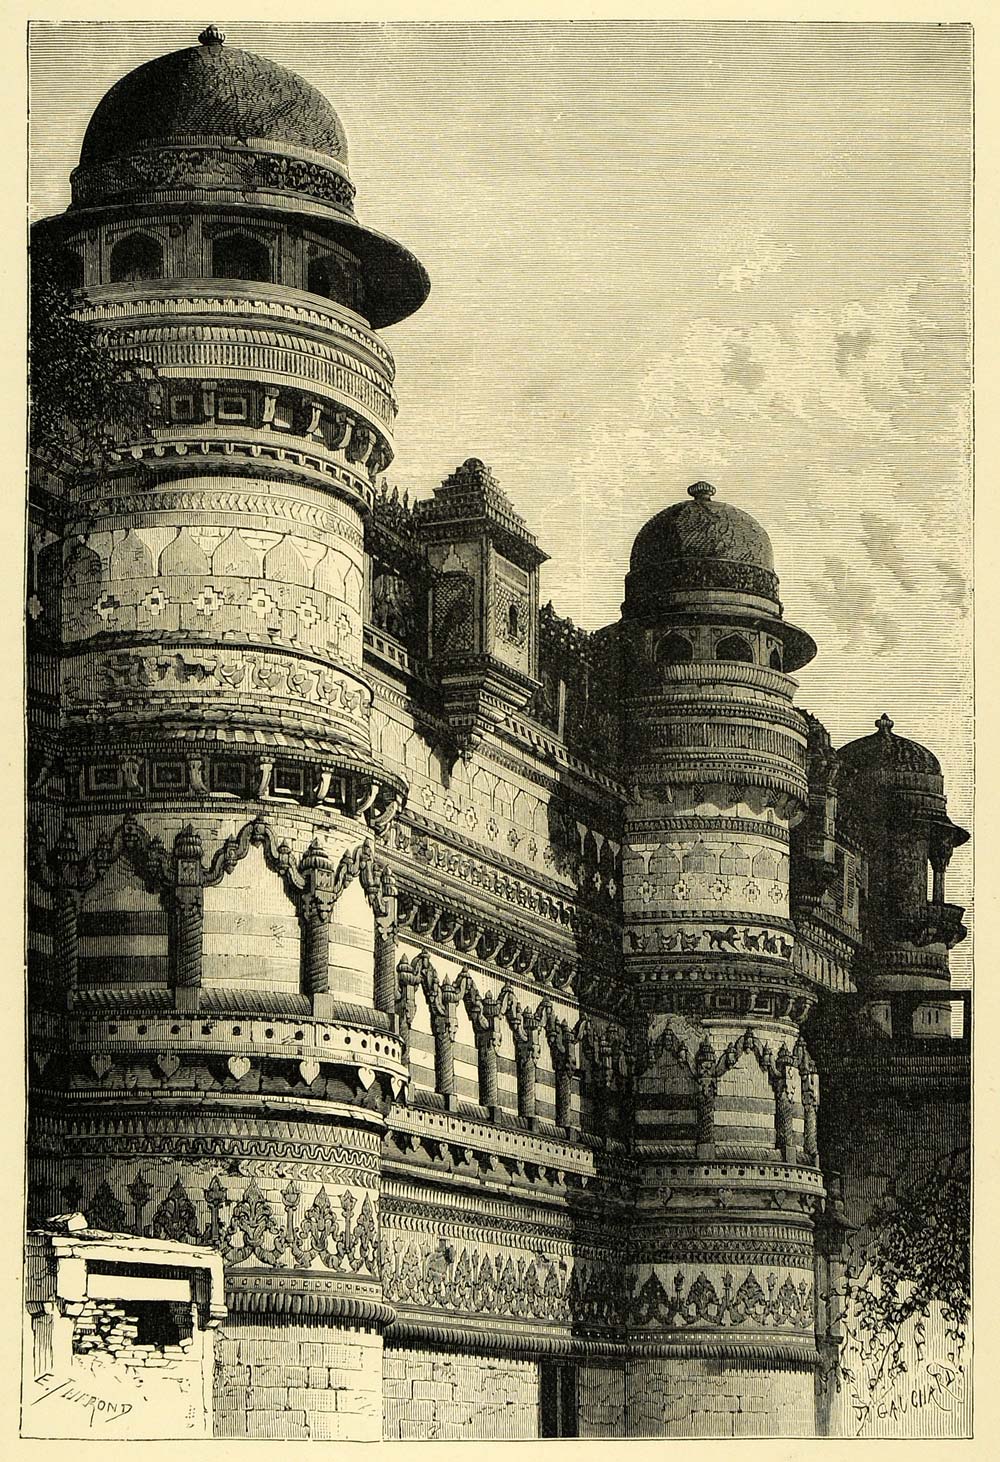 Gwalior Fort-IV - Scenery Acrylic Painting | World Art Community